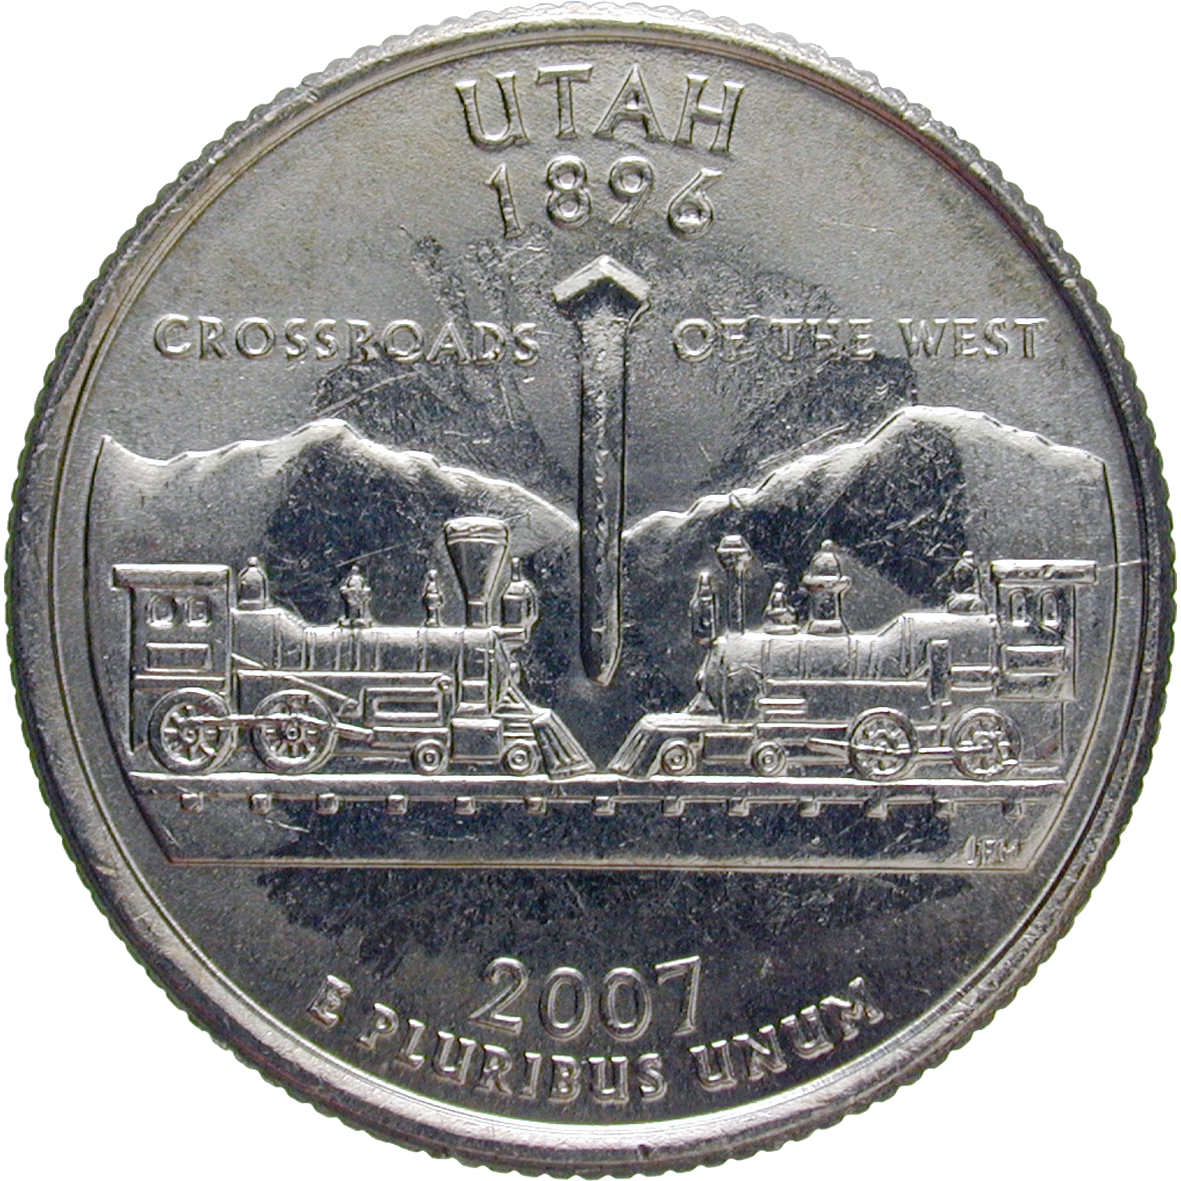 United States of America, Quarter Dollar 2007 (reverse)